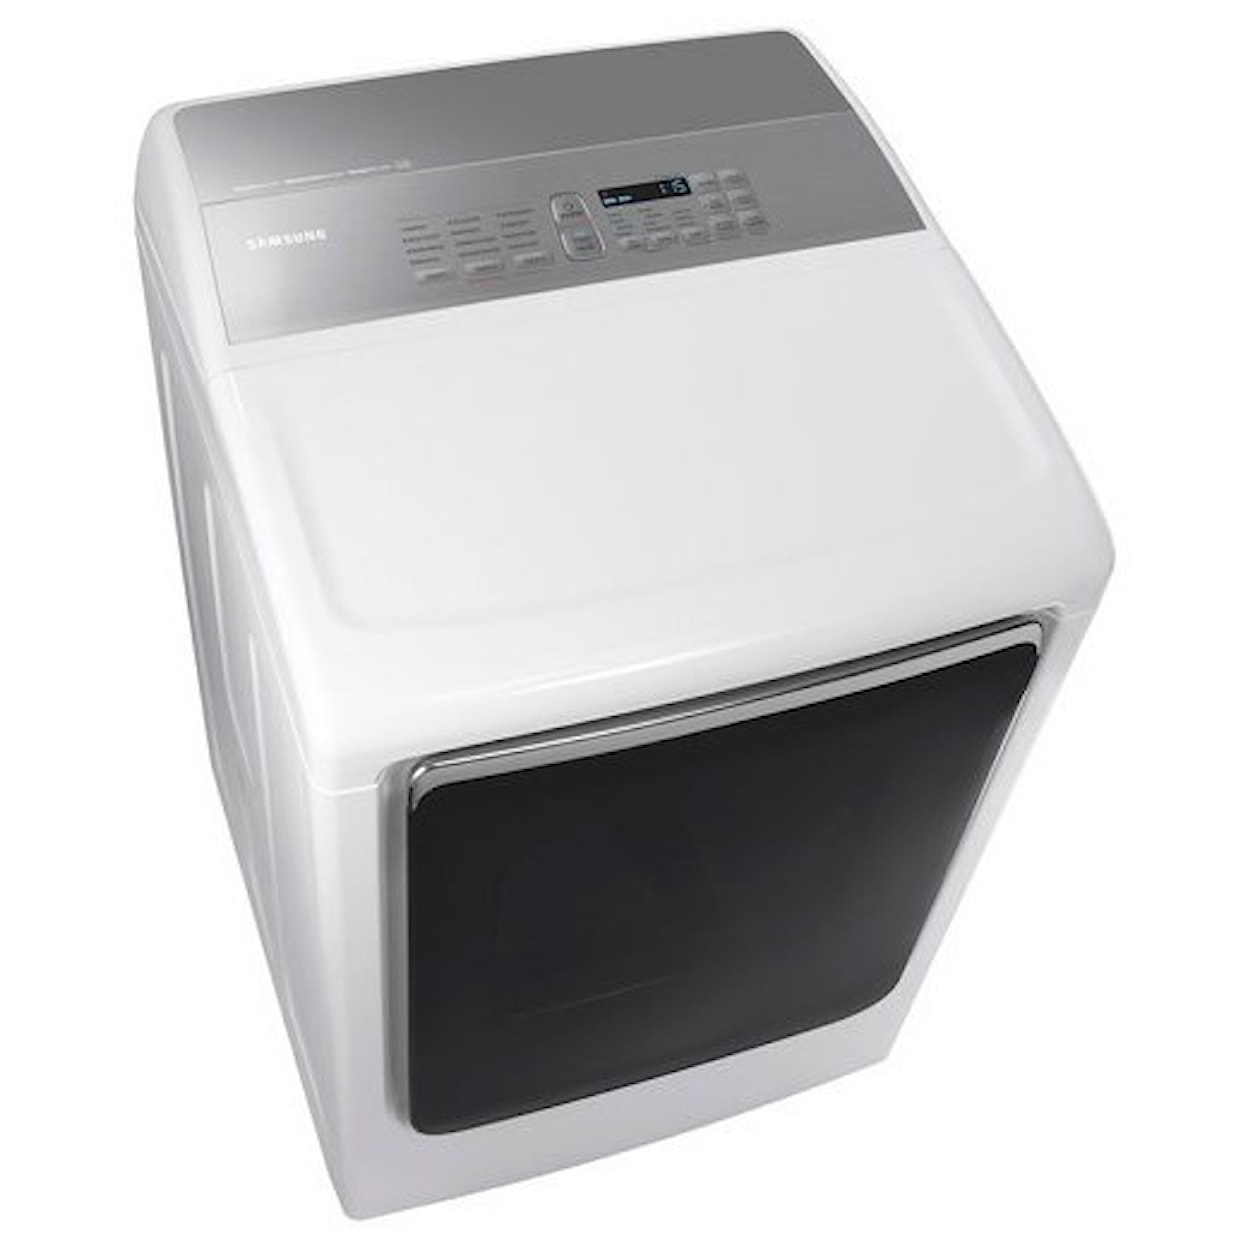 Samsung Appliances Gas Dryers - Samsung DV8650 7.4 cu. ft. Gas Dryer